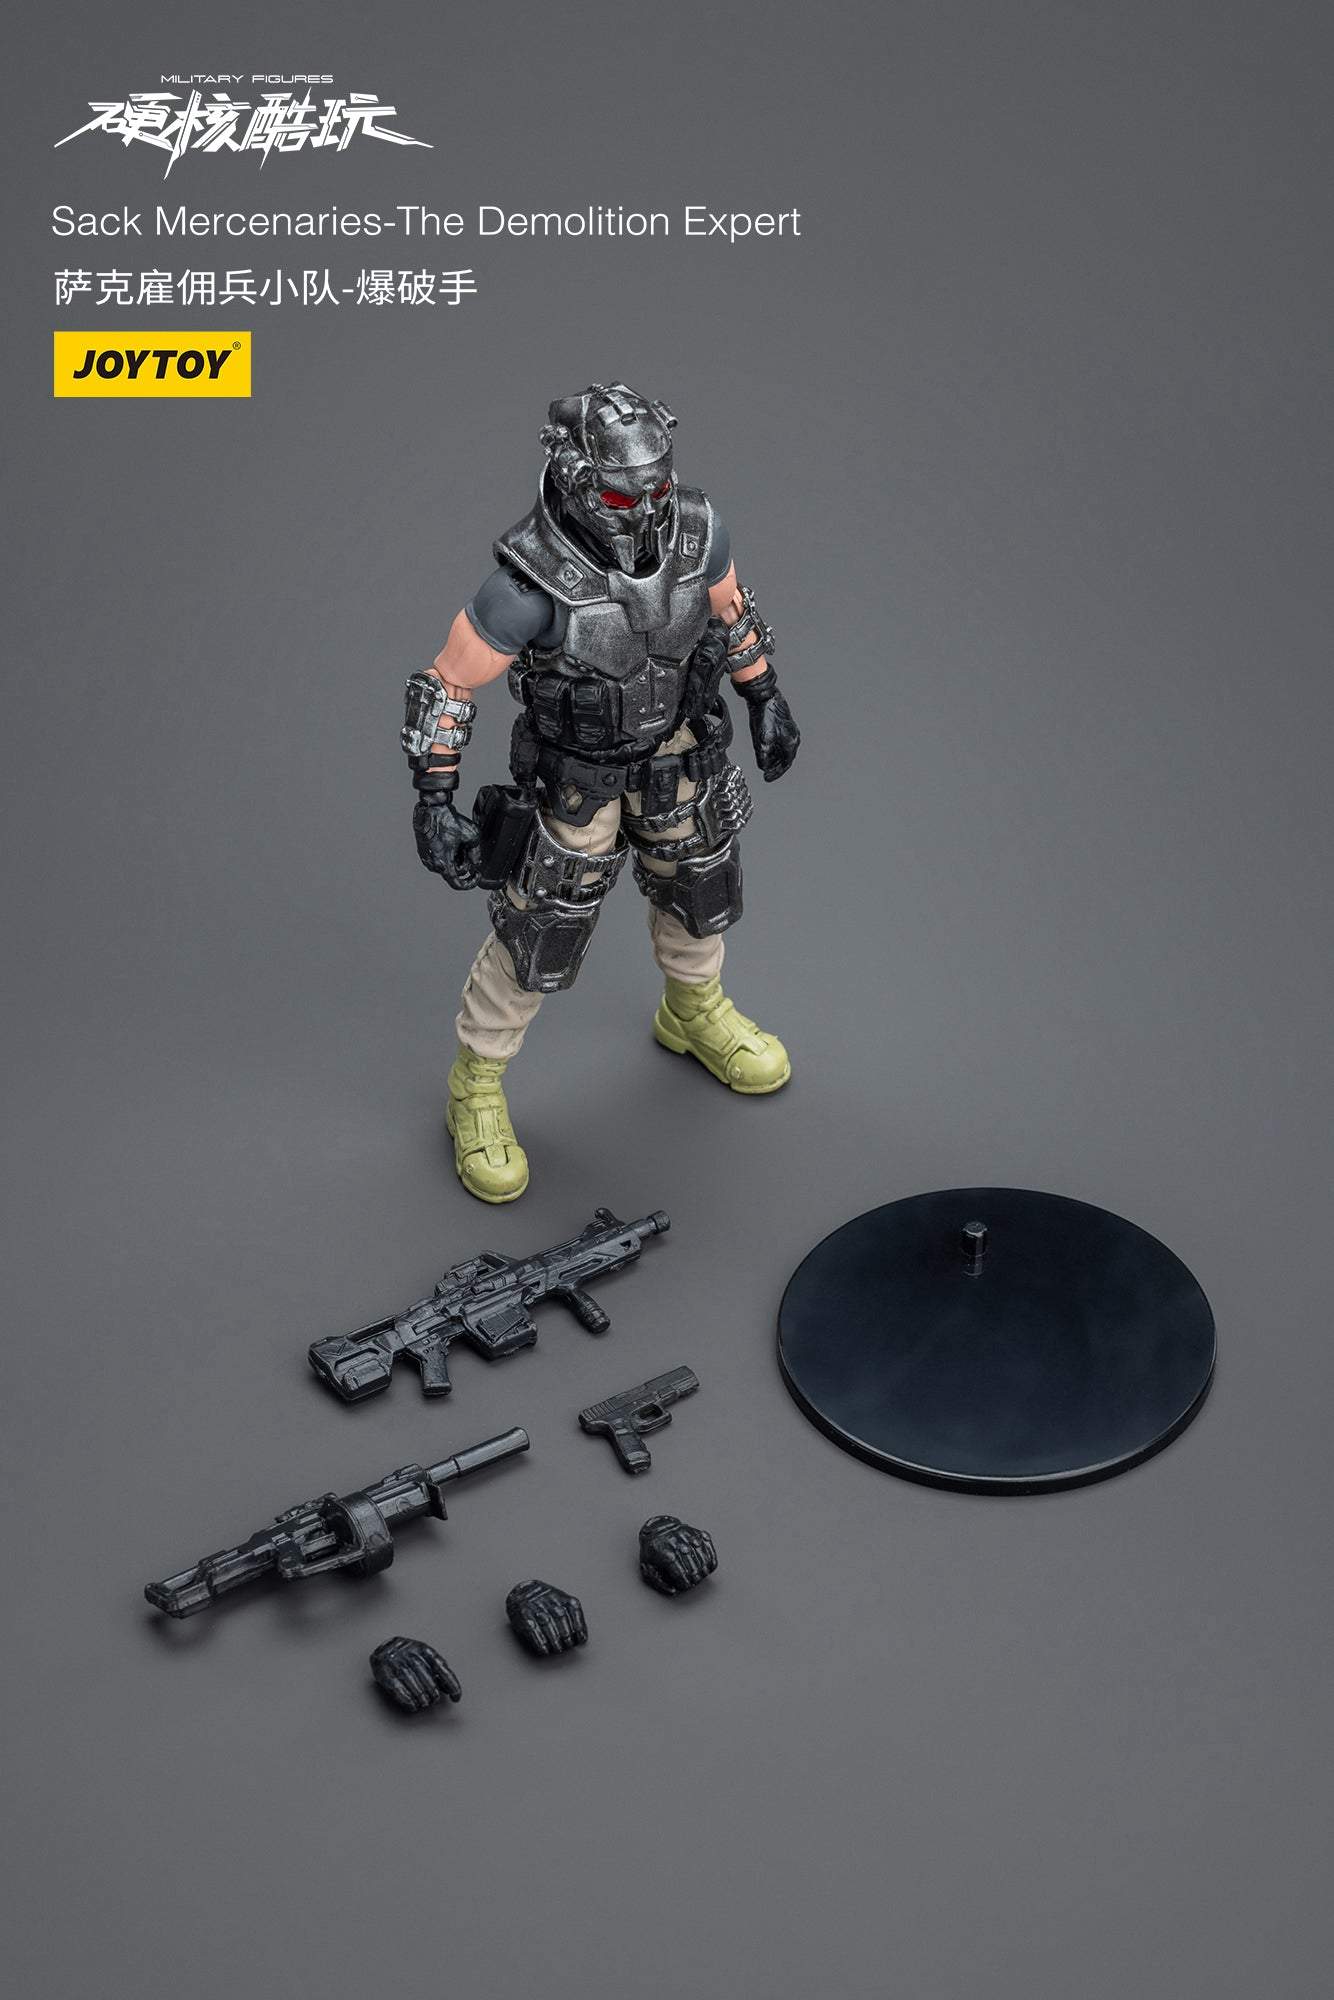 Sack Mercenaries-The Demolition Expert - Military Action Figure By JOYTOY